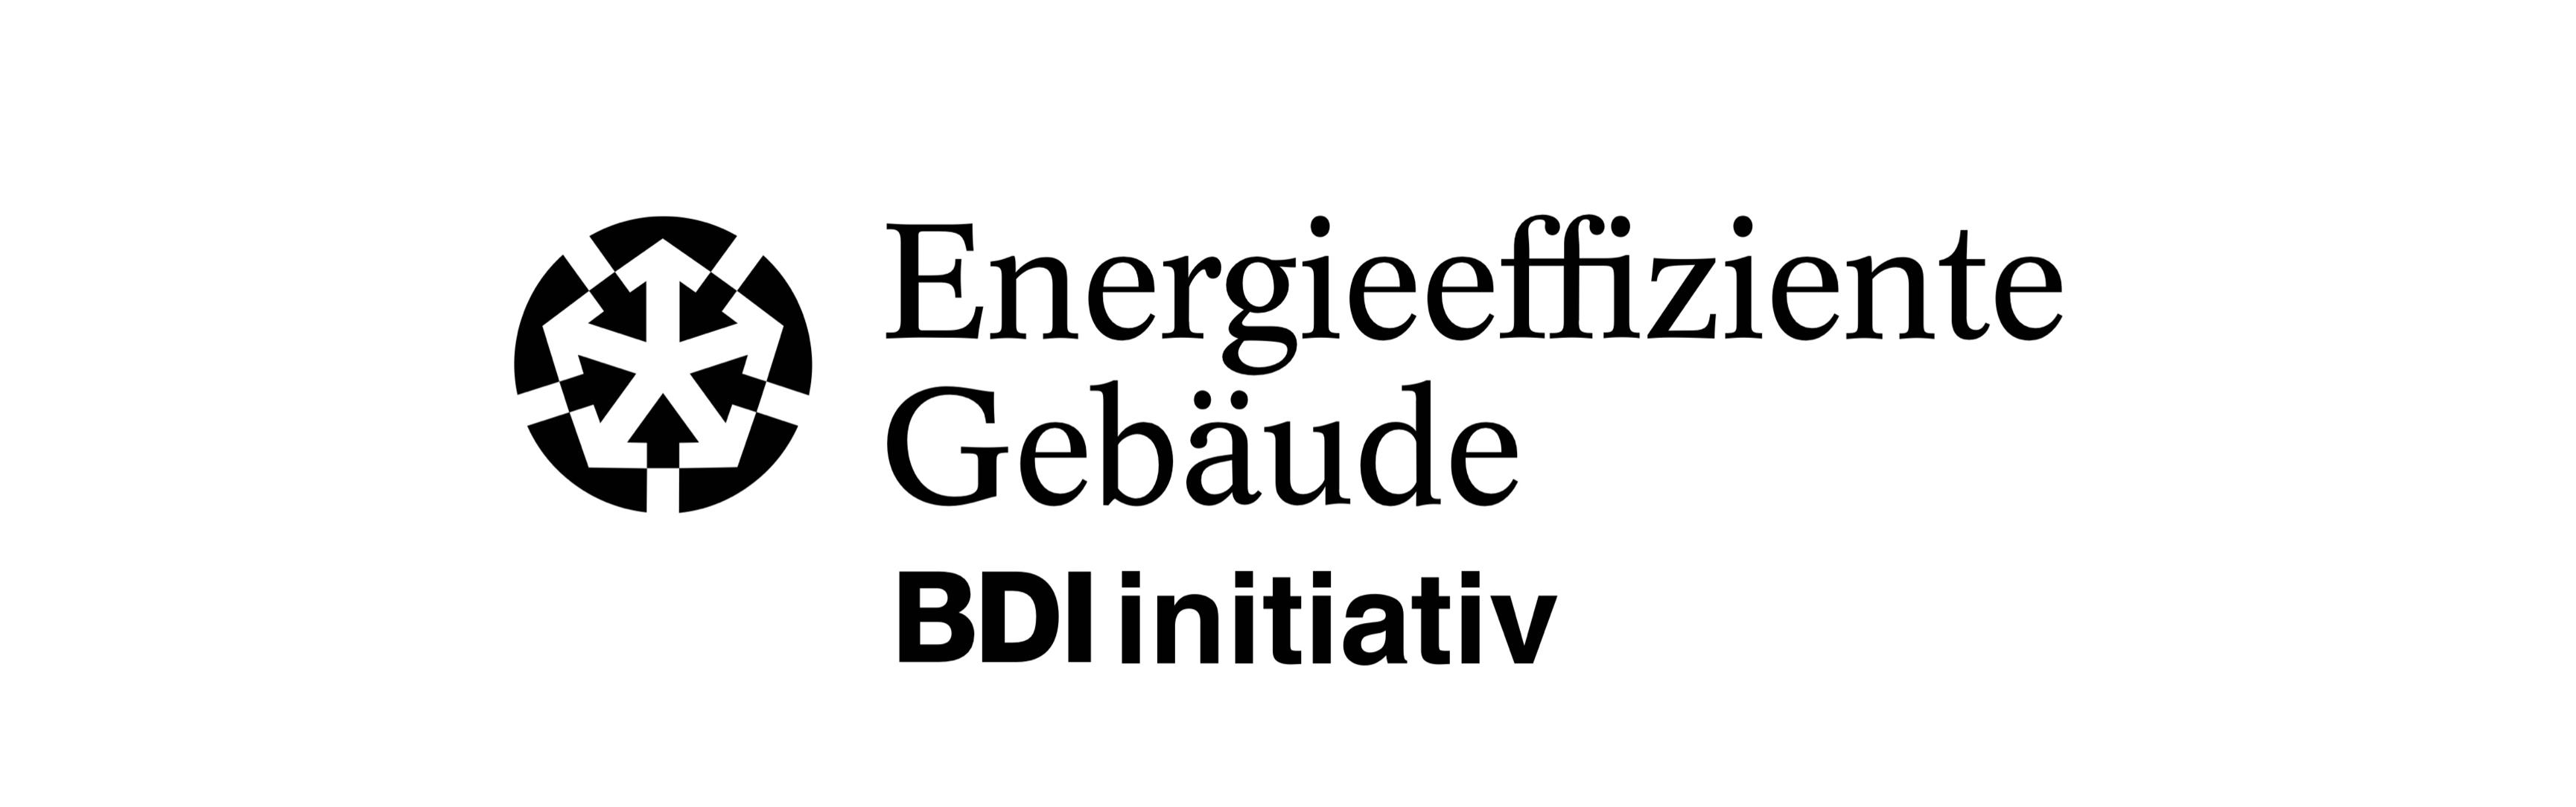 BDI Initiative Energieeffiziente Gebäude